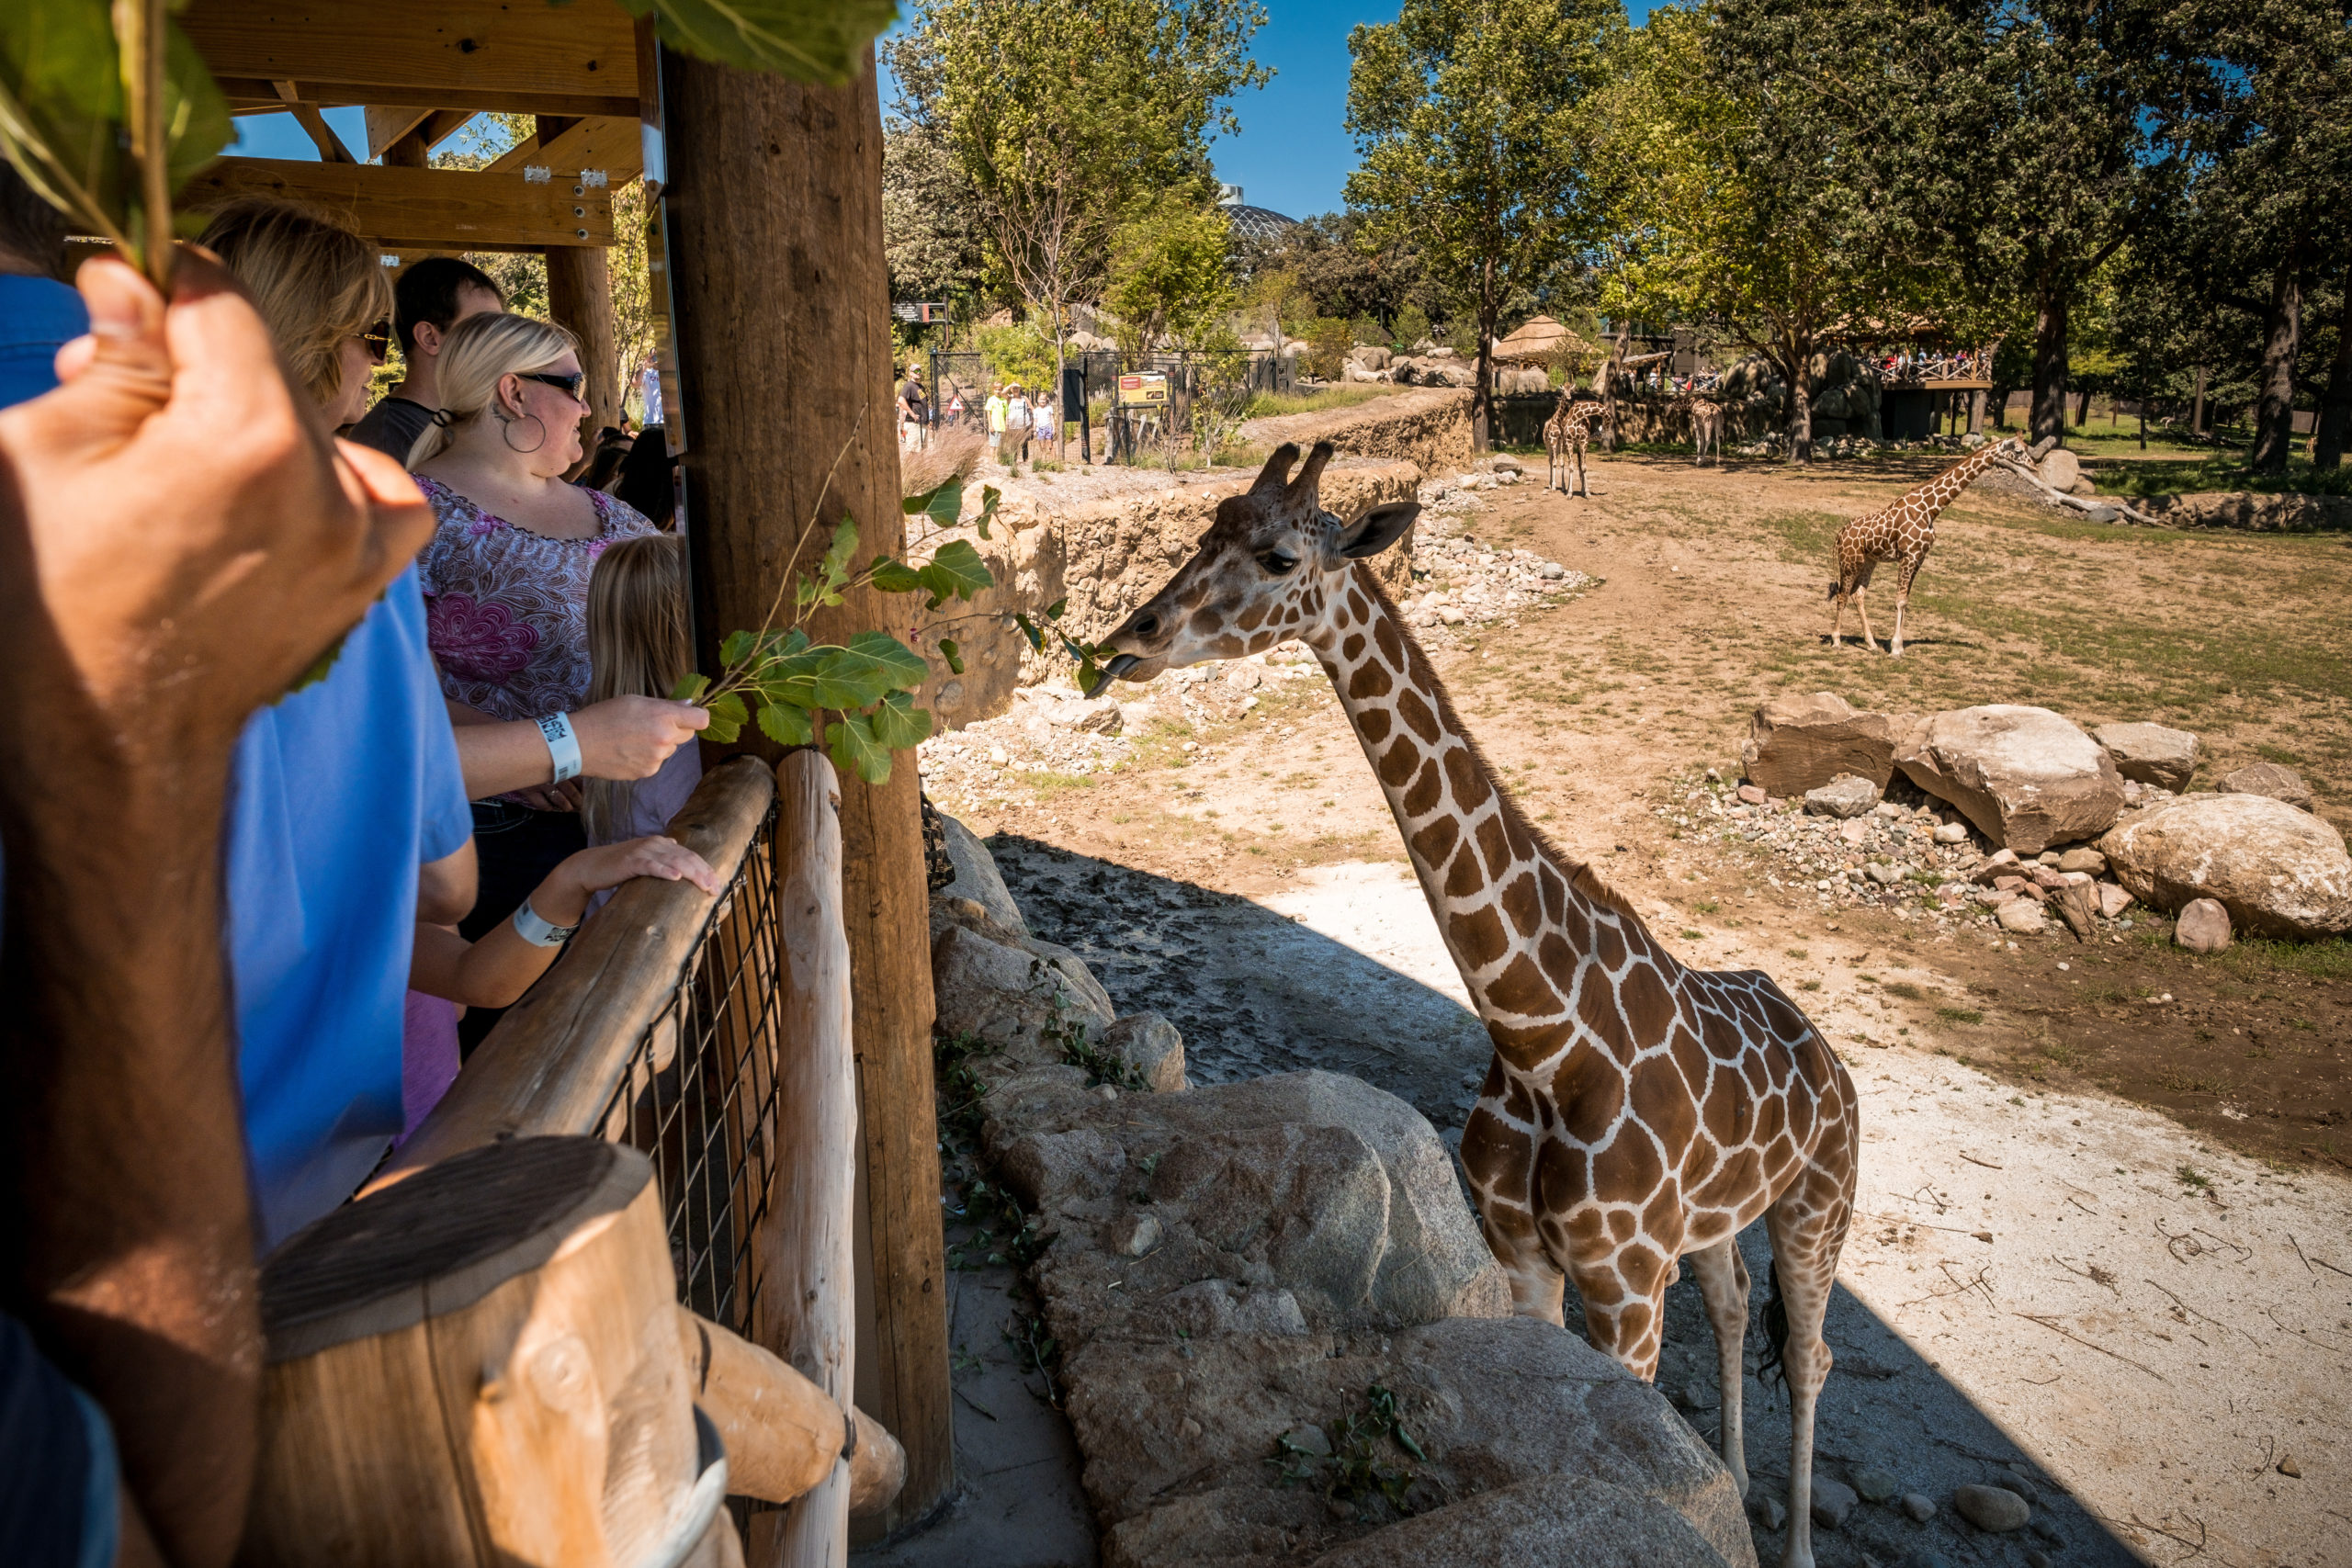 HD Zoo Giraffe Feeding Courtesy of Visit Omaha